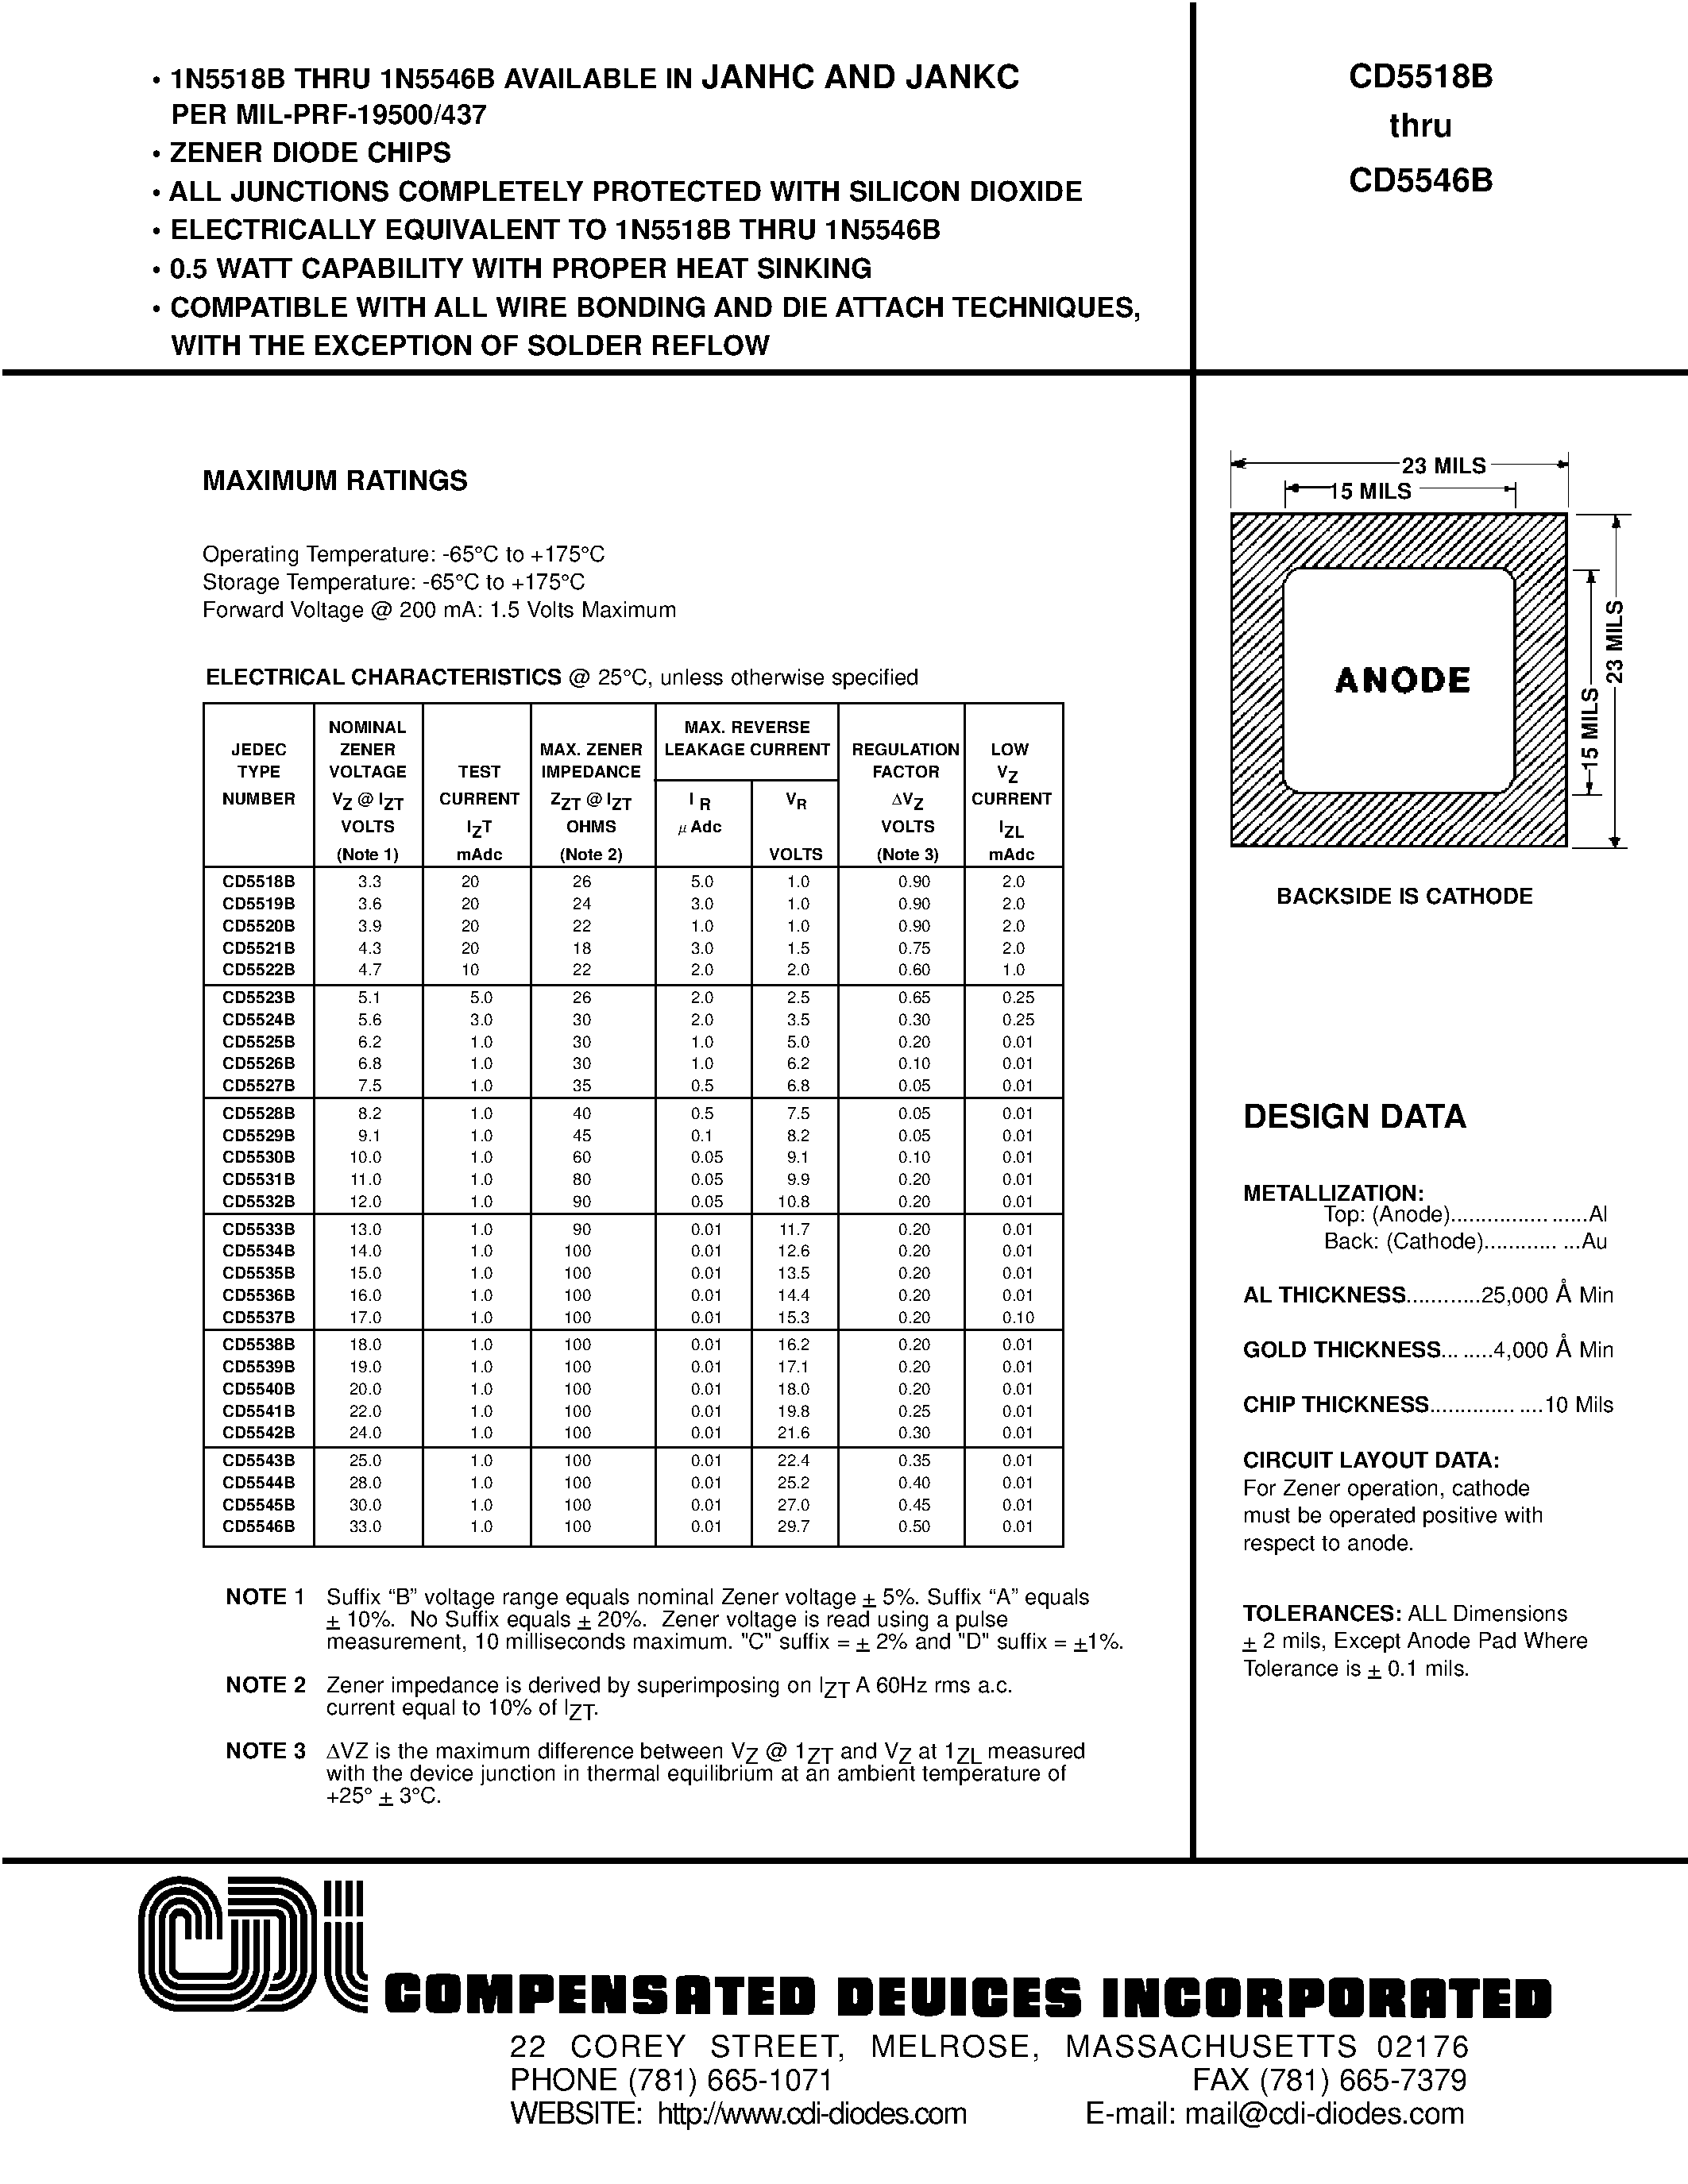 Datasheet CD5534B - ZENER DIODE CHIPS page 1